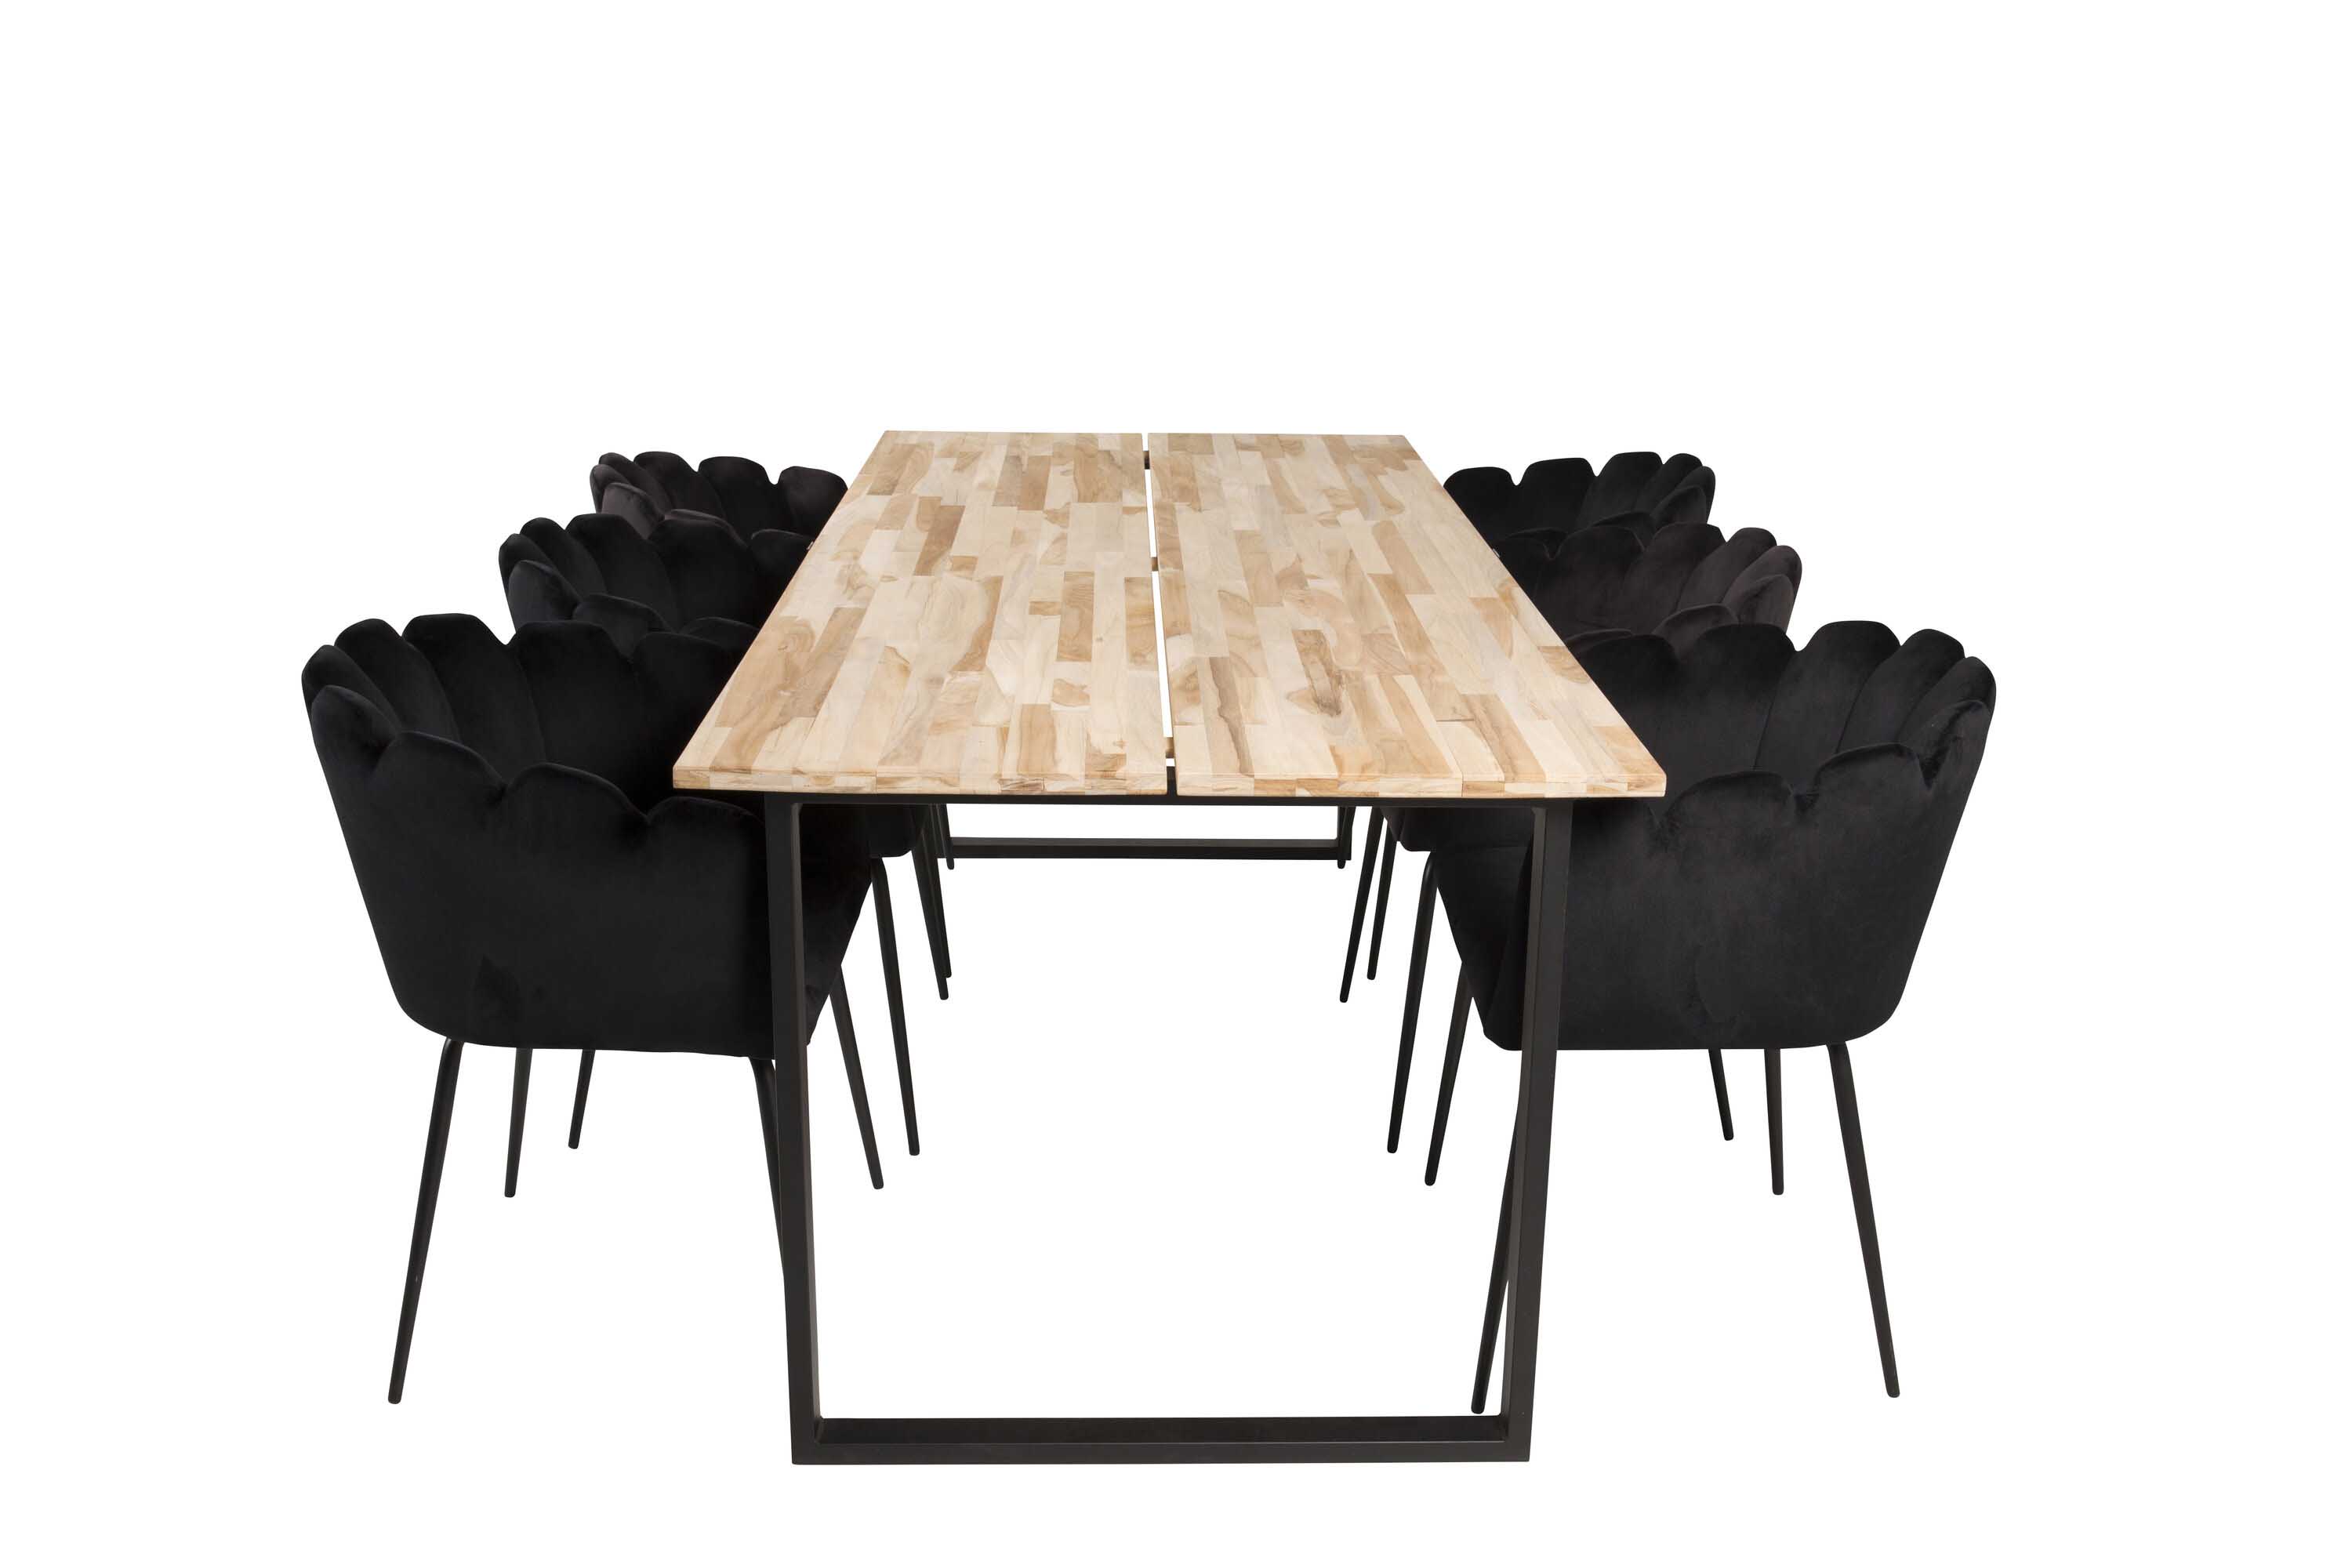 Venture Design Cirebon & Limhamn spisegruppe Natur/svart 6 st stoler & bord 200 x 90 cm